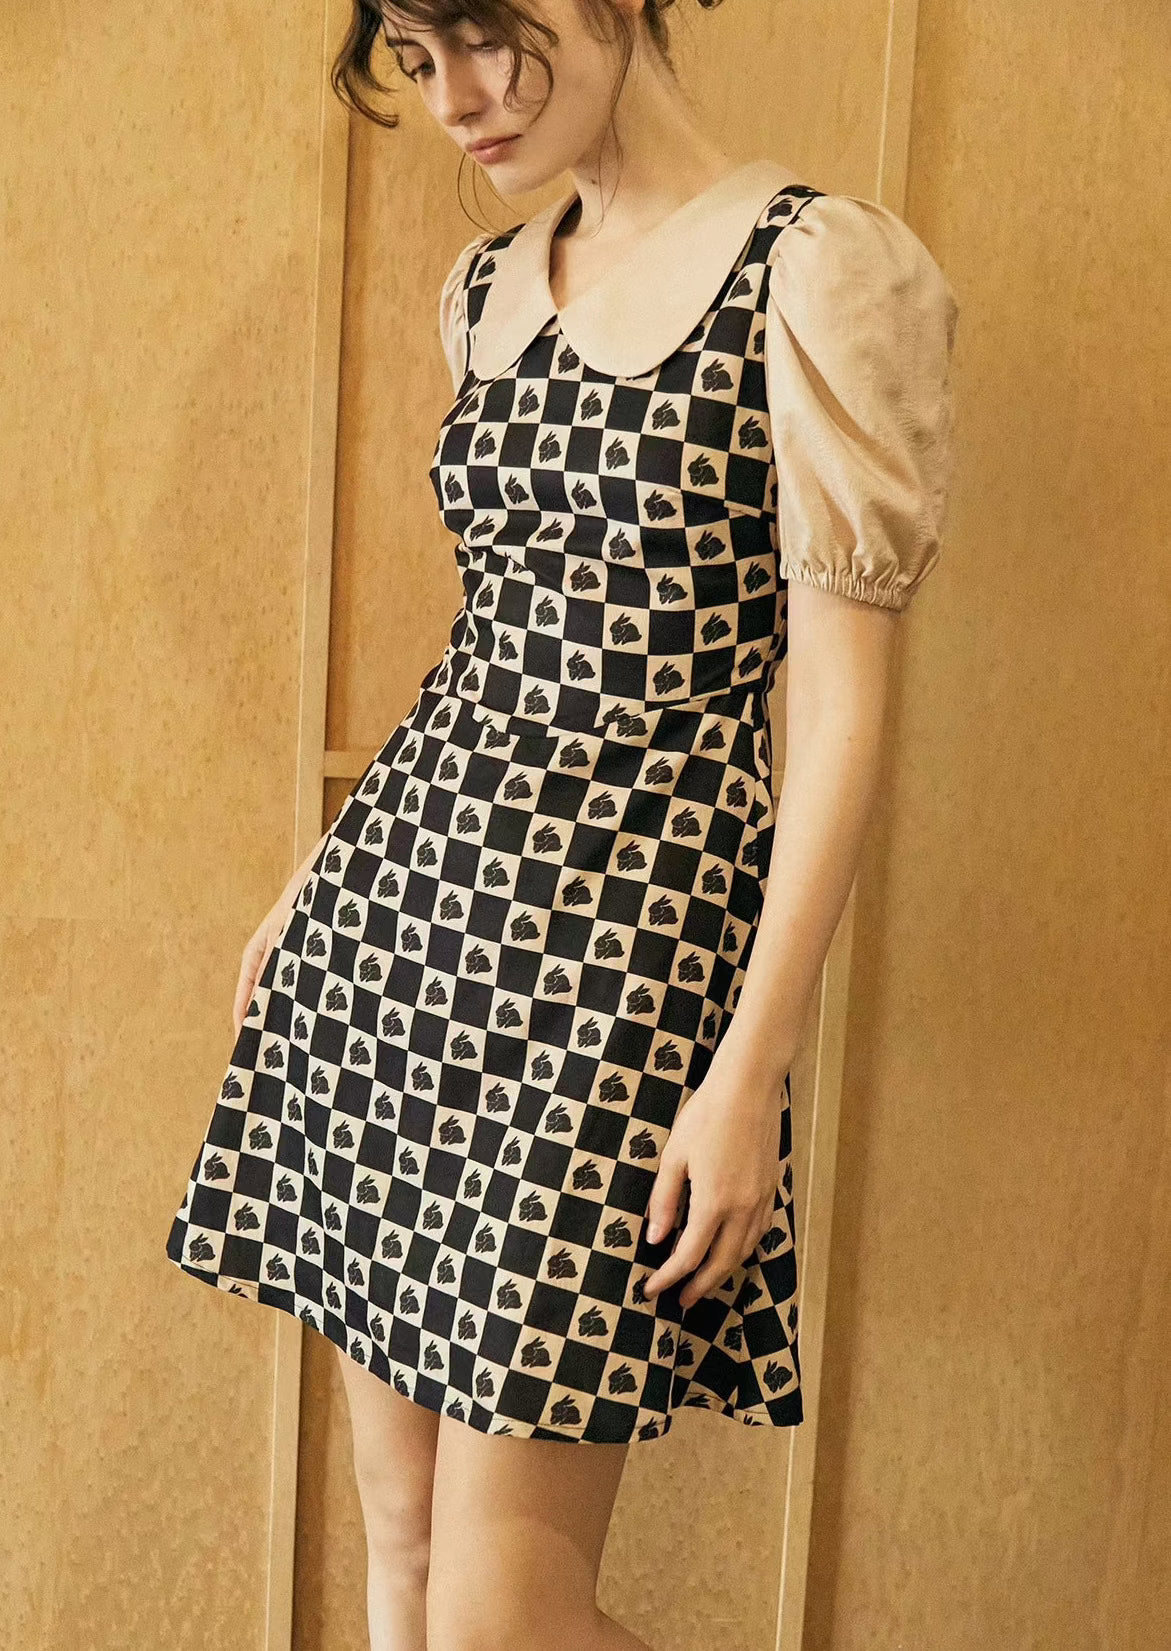 checkerboard rabbit silhouette dress 